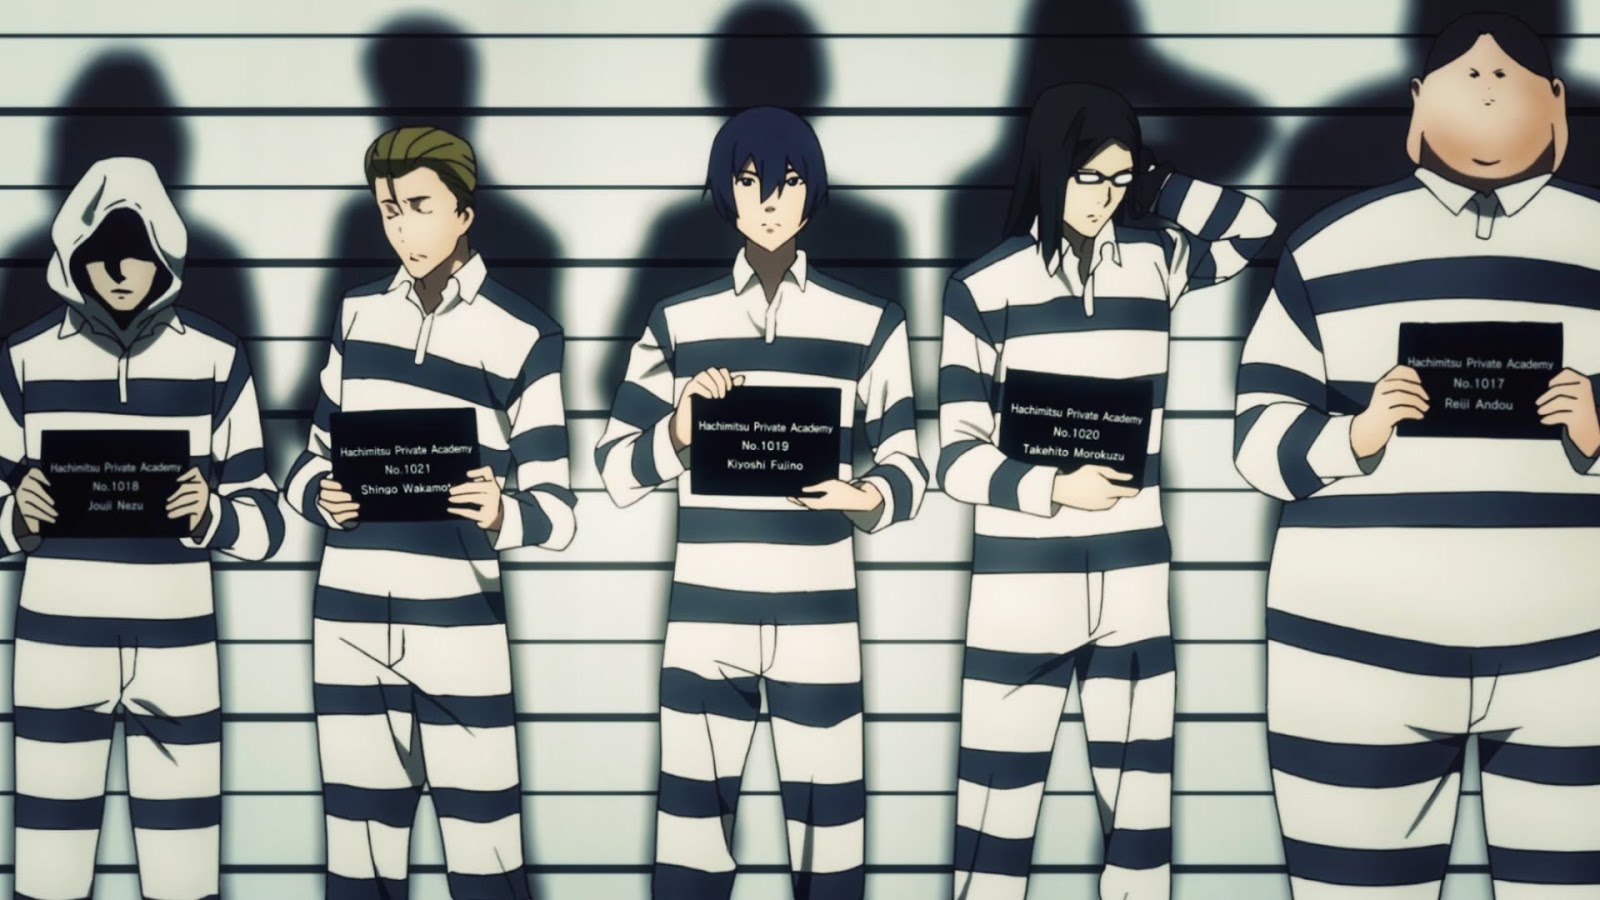 Prison School Anime Ganha V Deo Promocional Em Ingl S